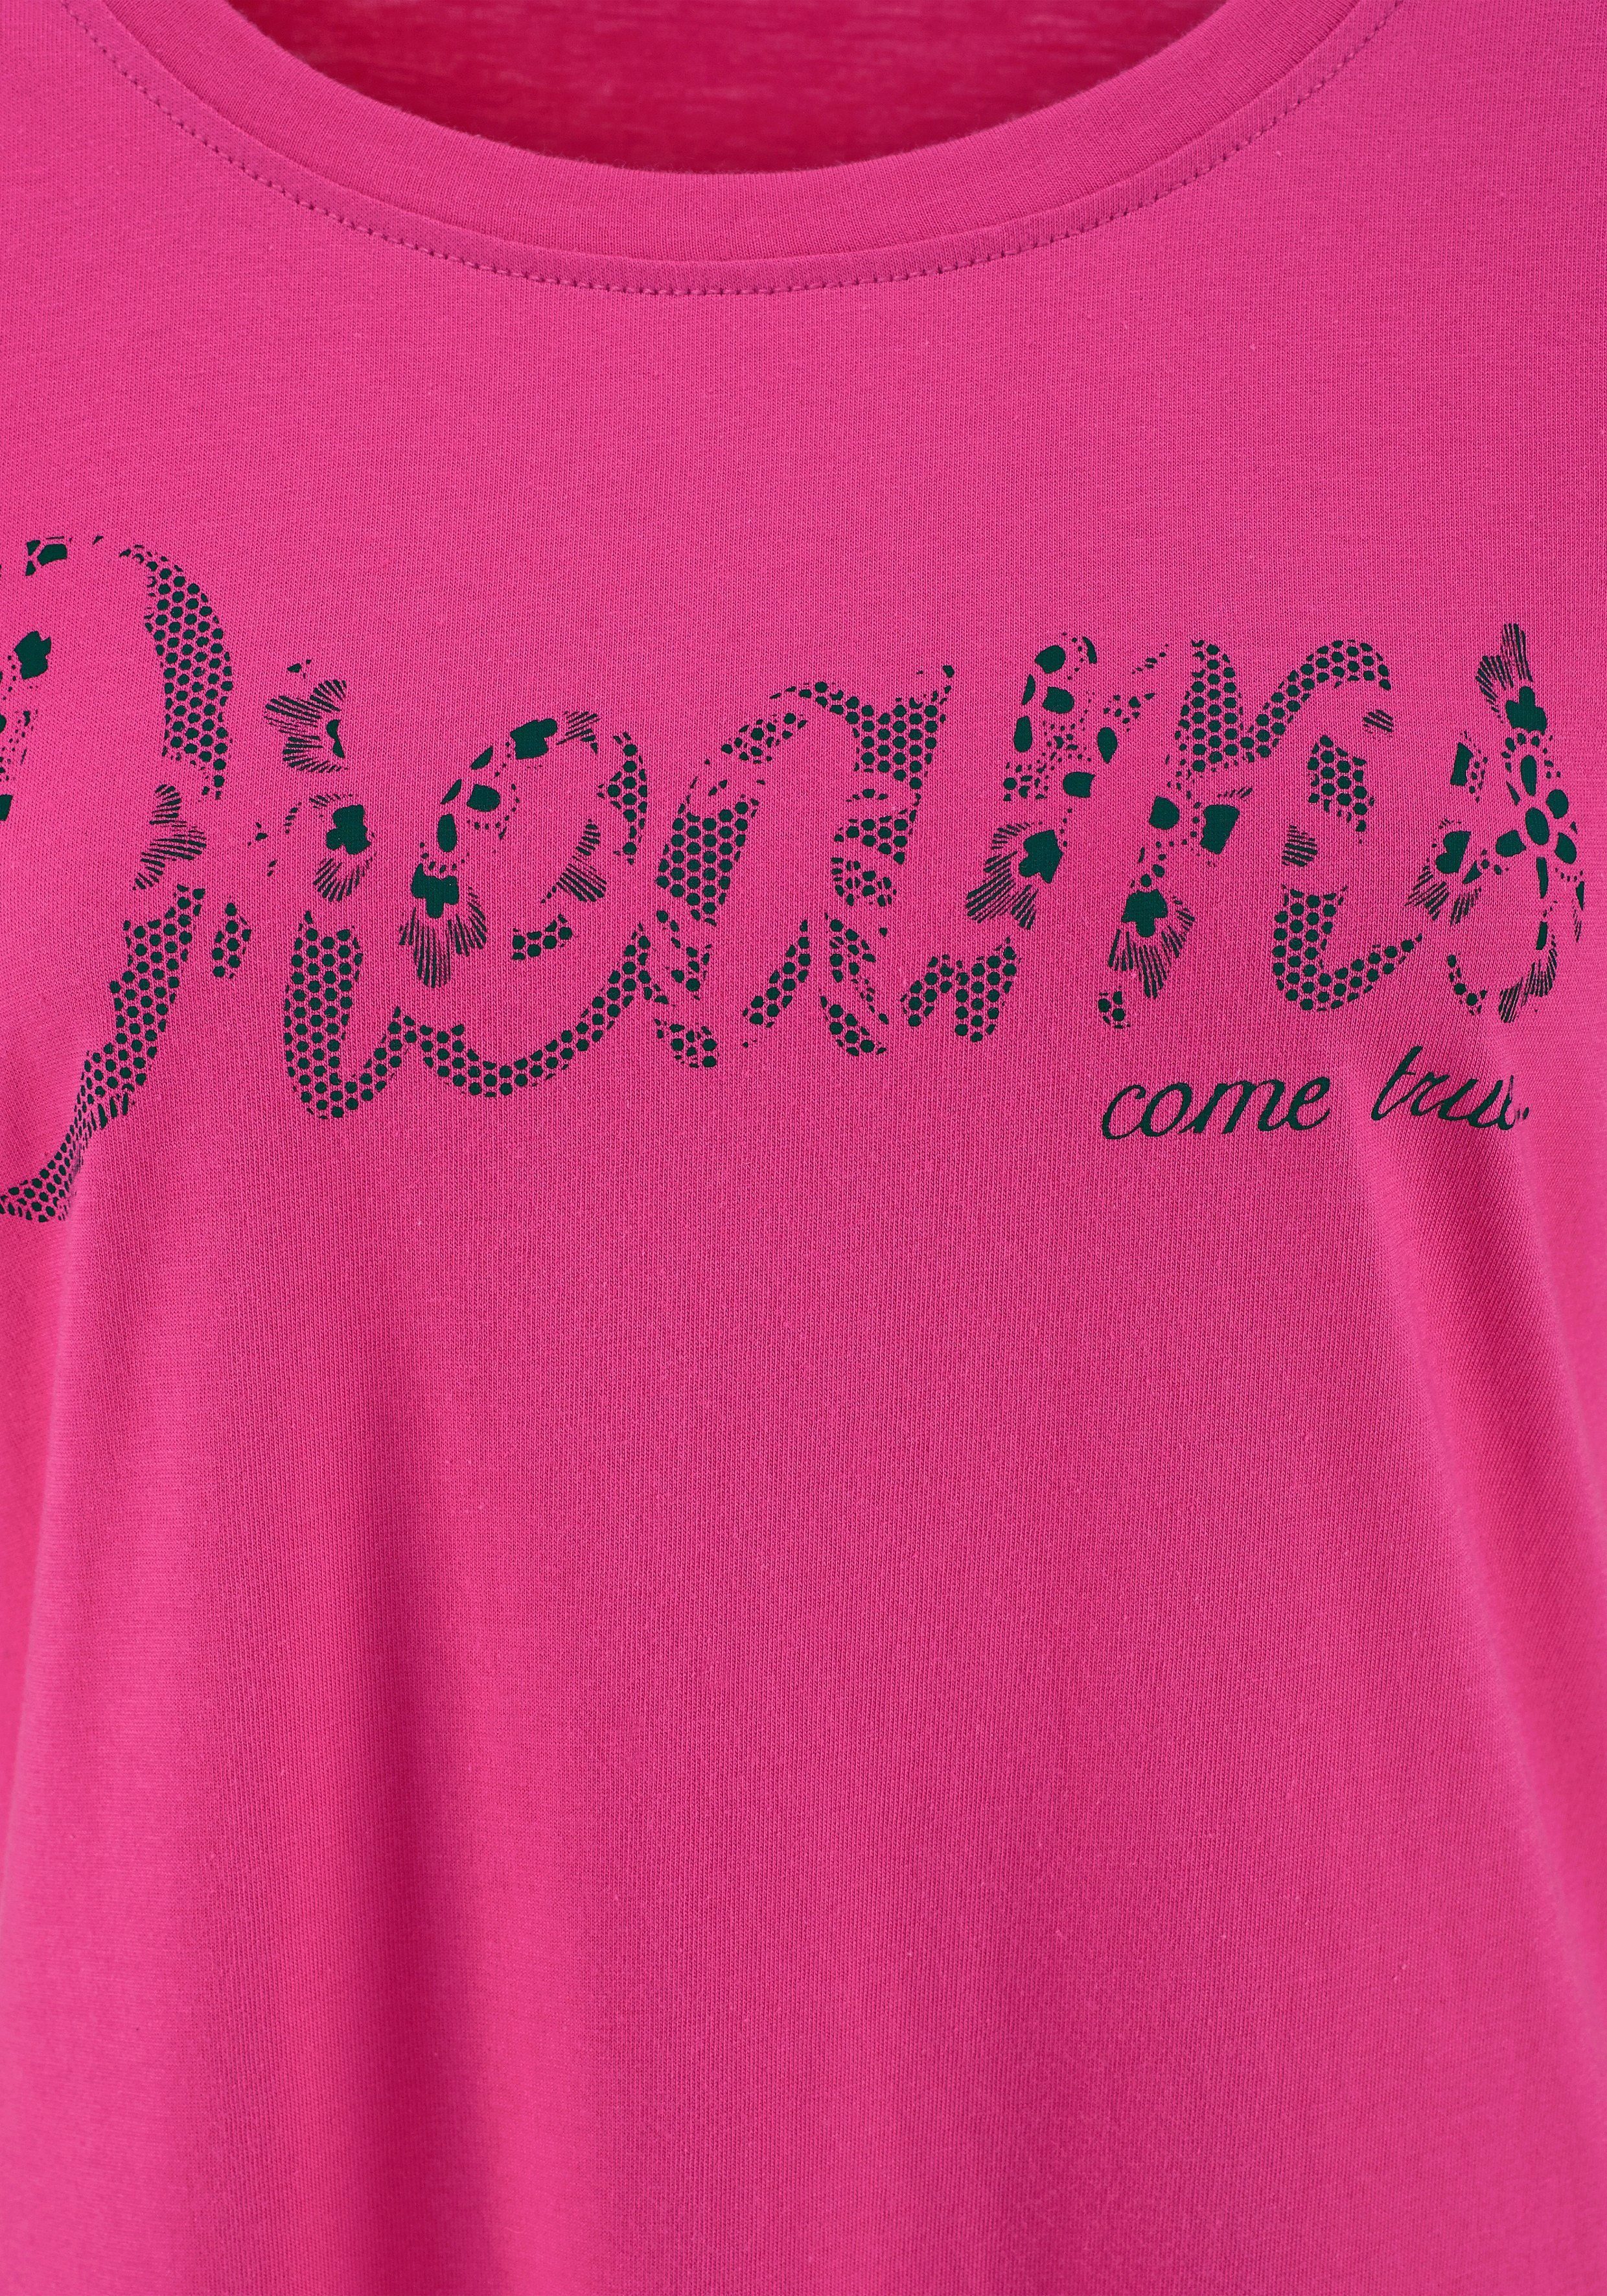 Vivance Dreams Sleepshirt (2er-Pack) pink, schwarz Spitzenoptik mit Print in